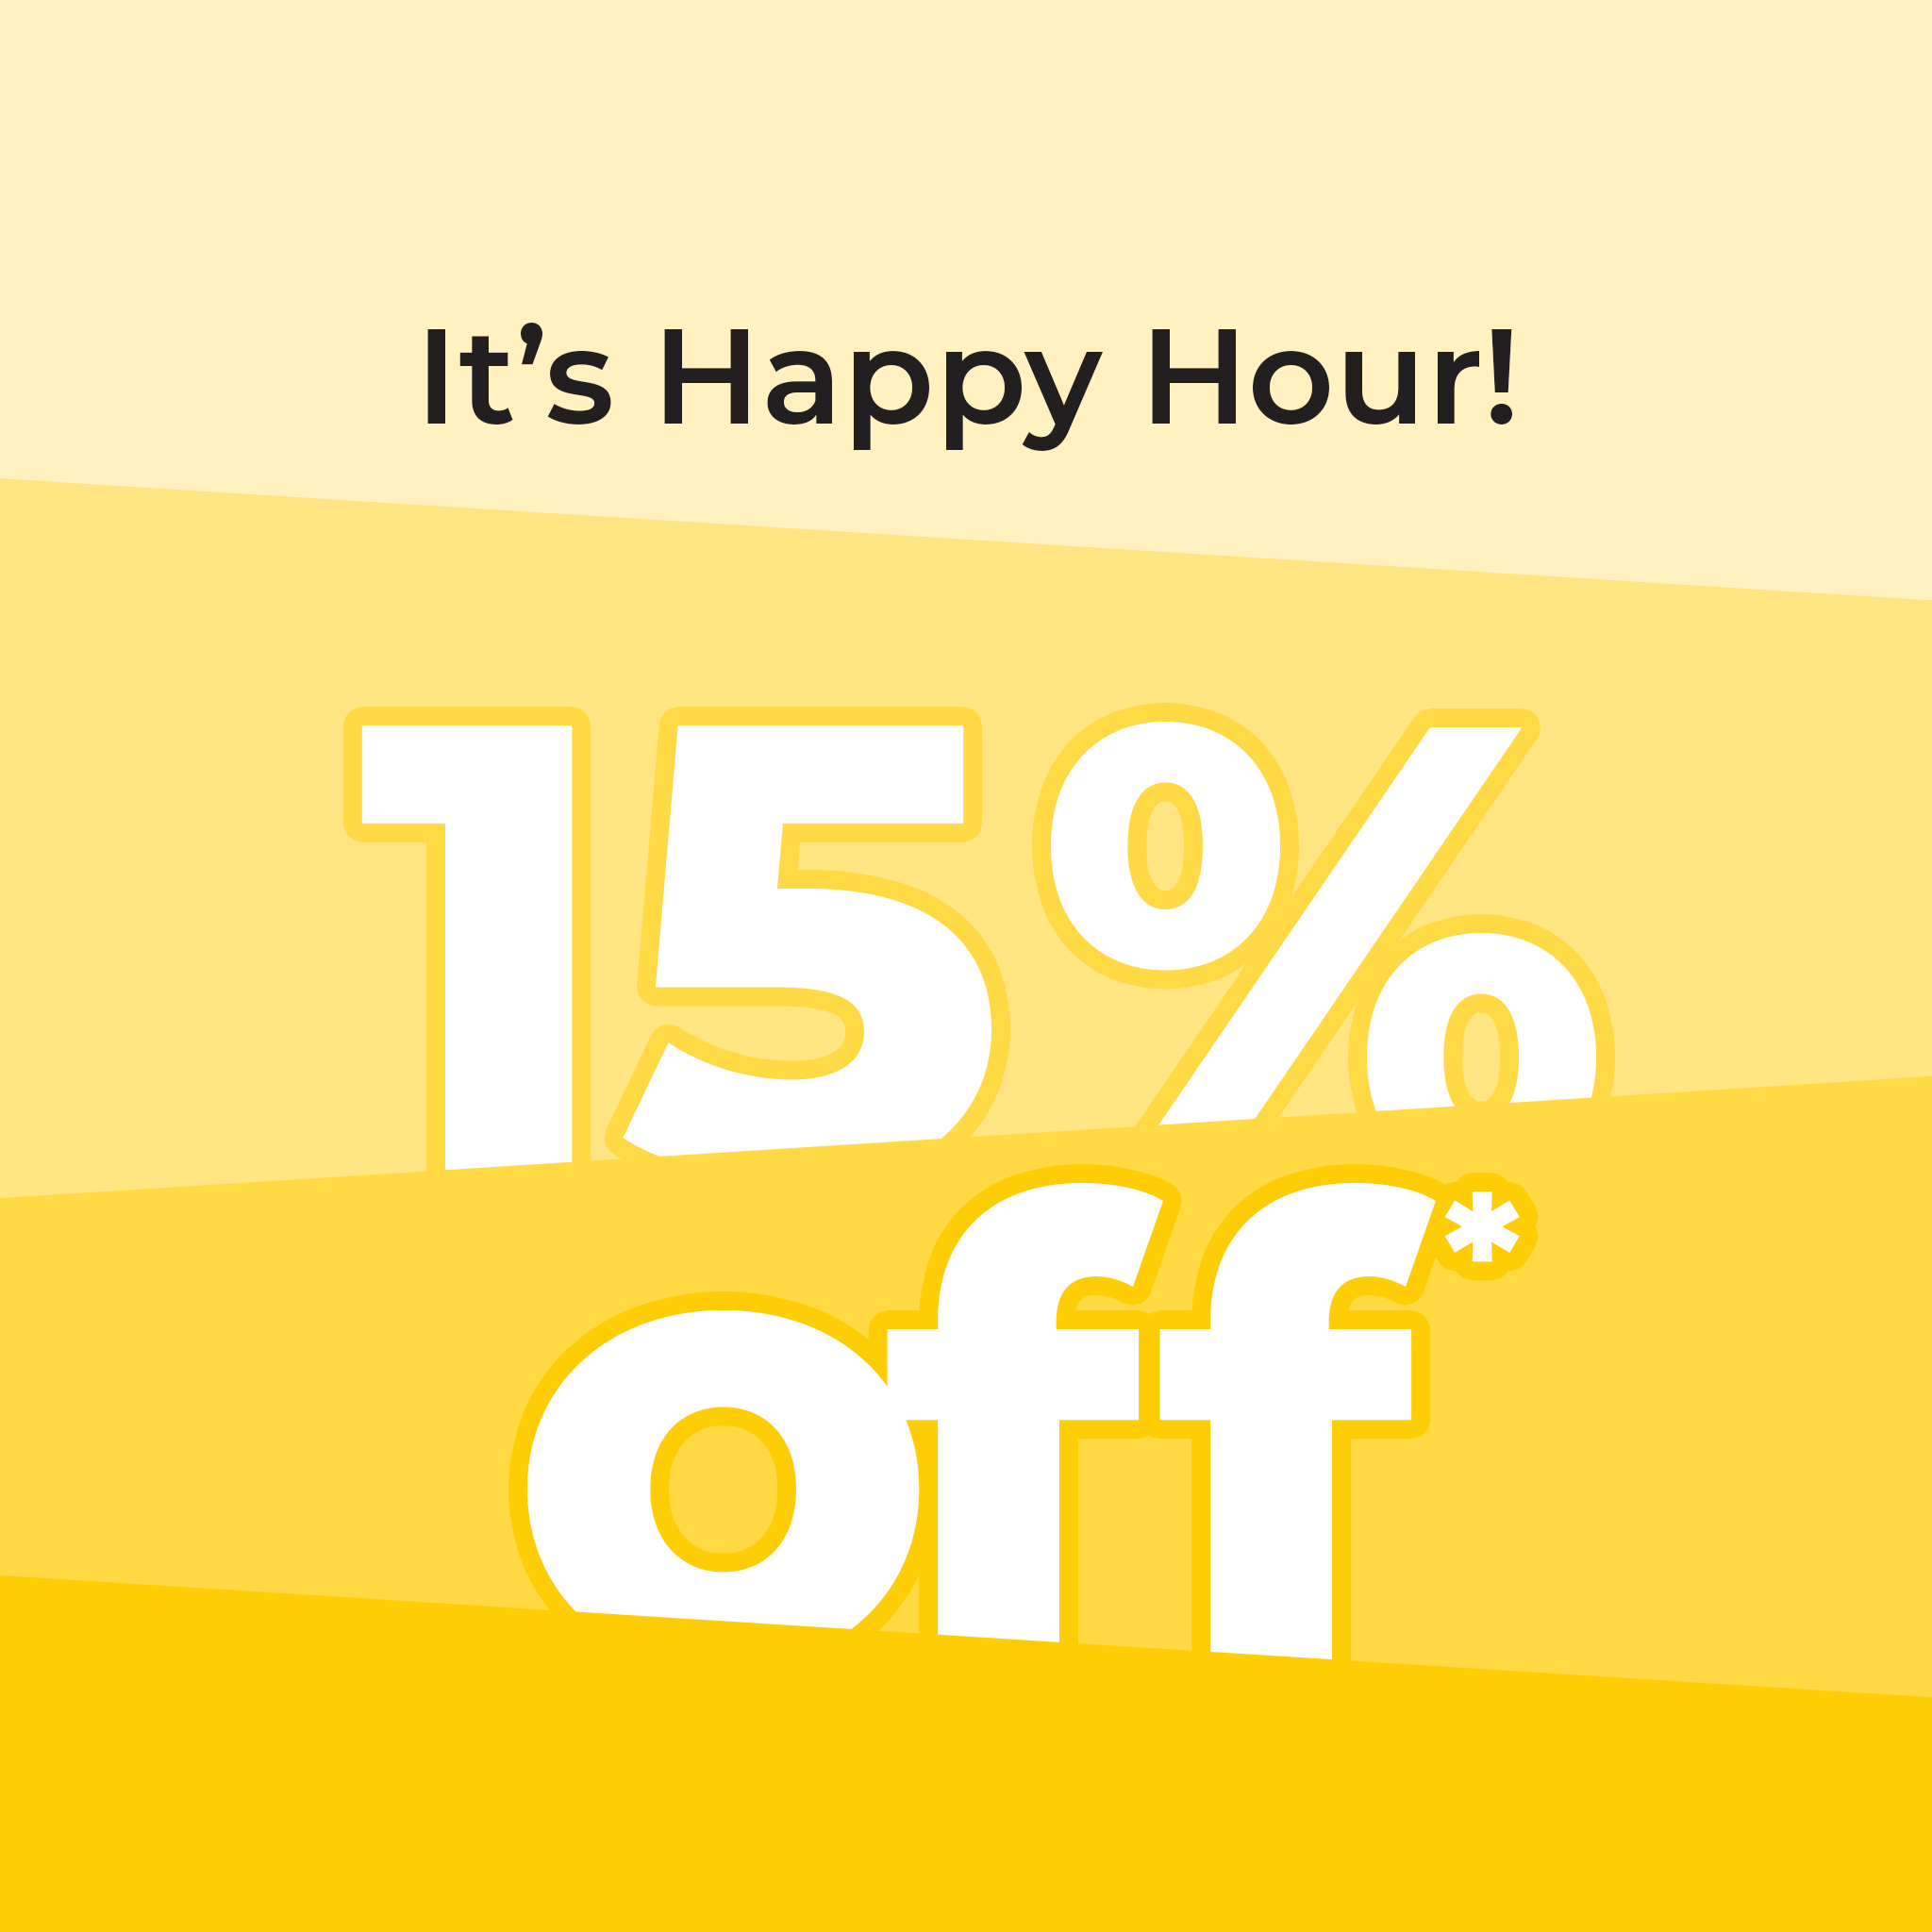 It's happy hour! 15% Off